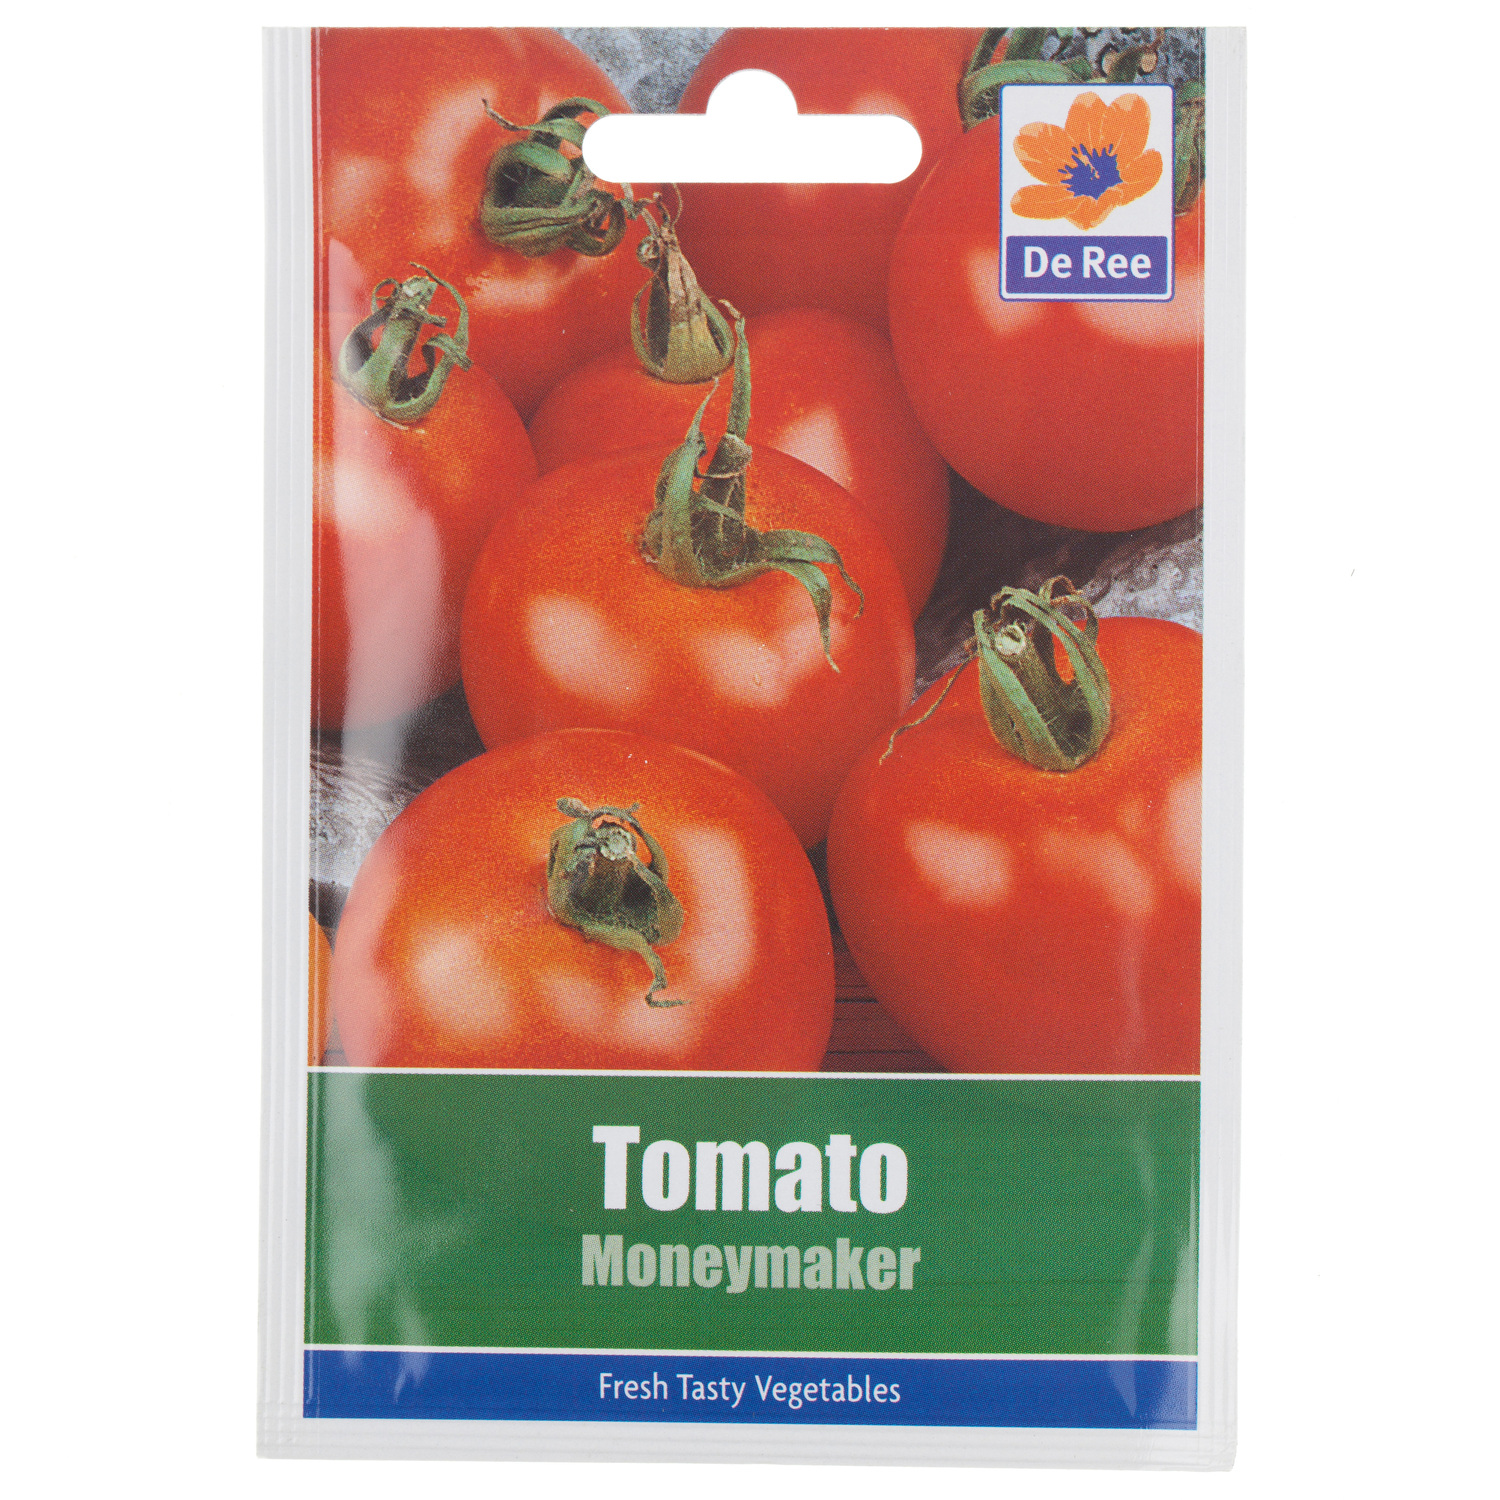 Tomato Moneymaker Seed Packet Image